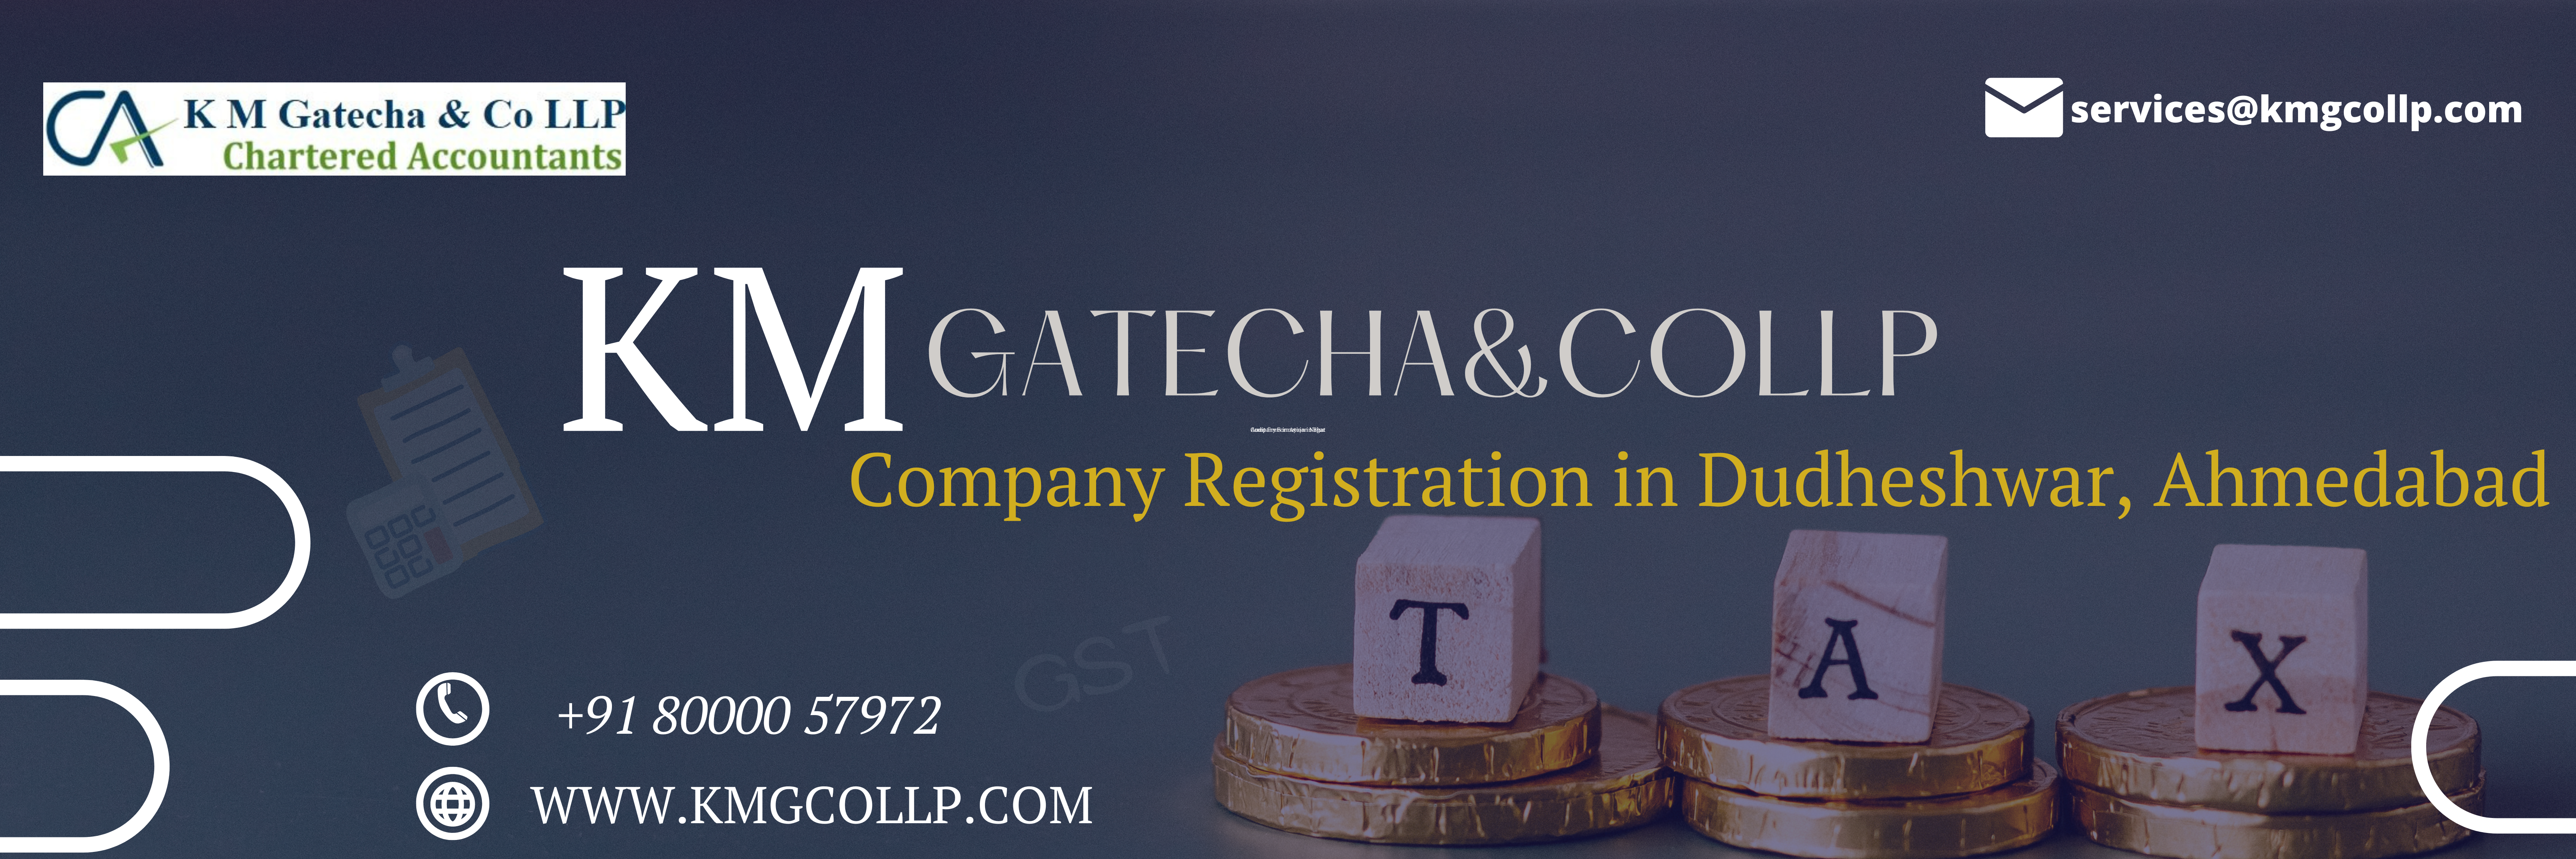 Company Registration in Dudheshwar, Ahmedabad